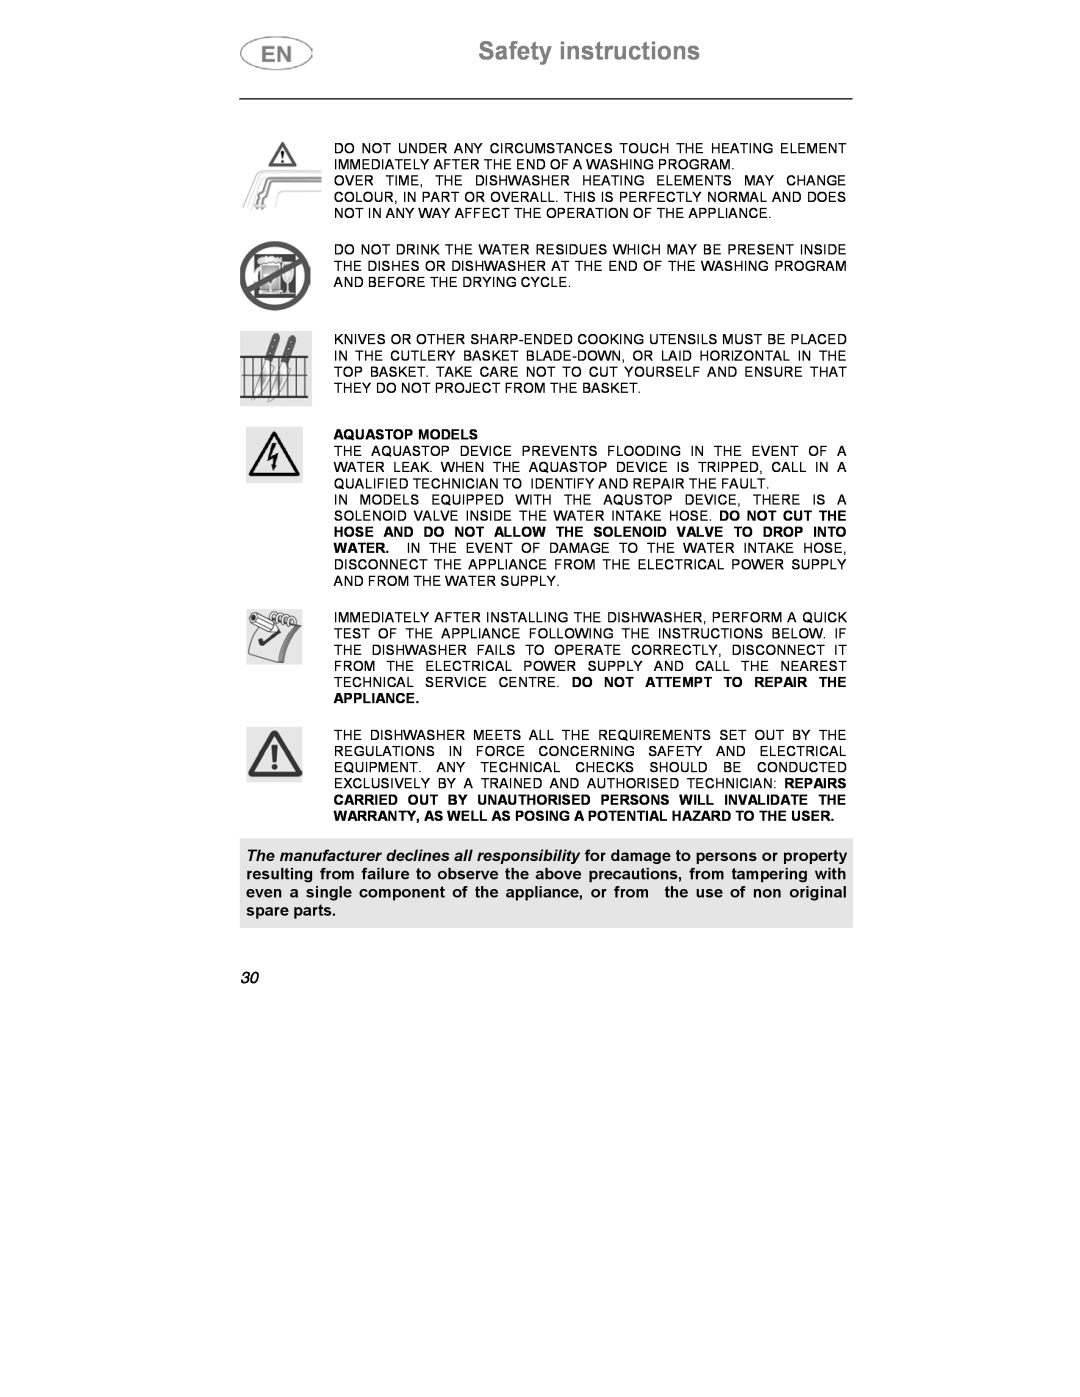 Smeg CA01-3 instruction manual Safety instructions, Aquastop Models, Appliance 